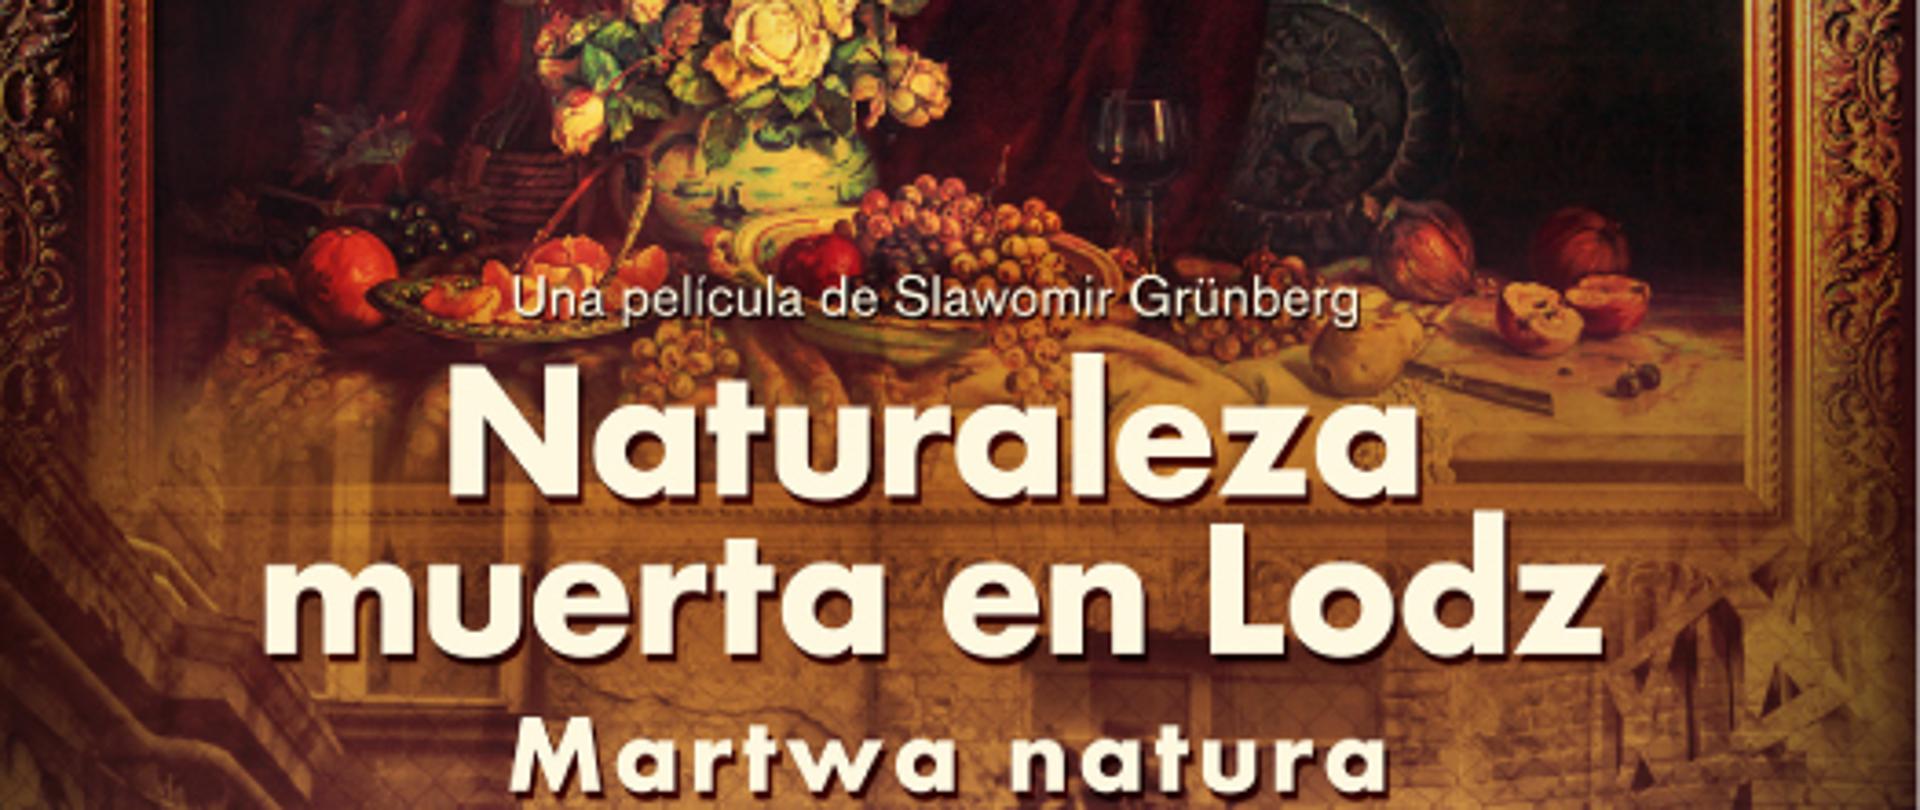 Naturaleza muerta en Lodz- S. Grunberg